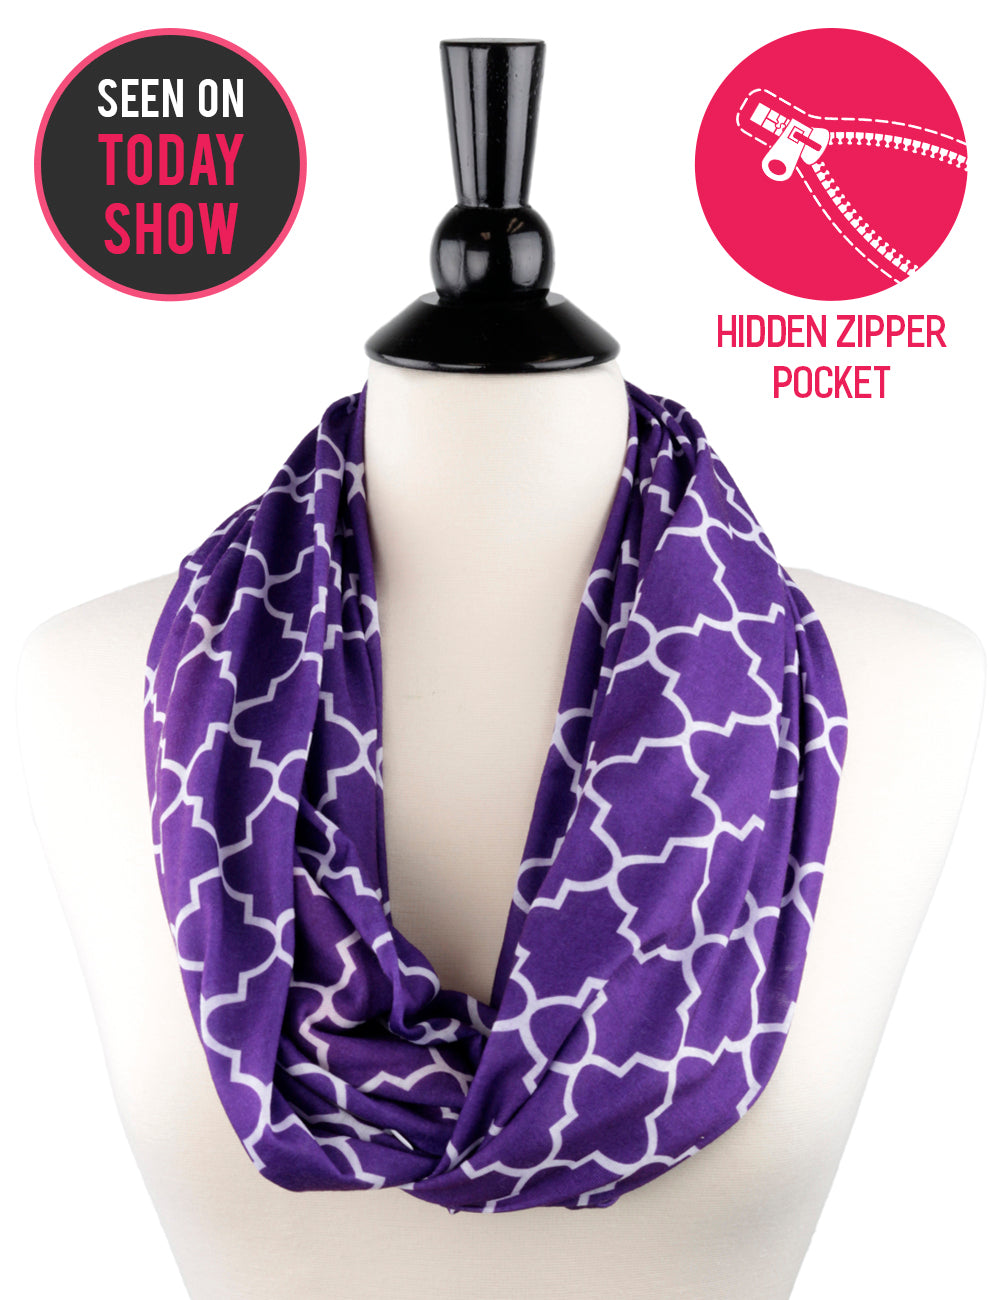 Women's Infinity Scarf with Zipper Pocket, Infinity Scarves with Quatrefoil Patterned Scarf Design & Hidden Zipper Pocket - Pop Fashion